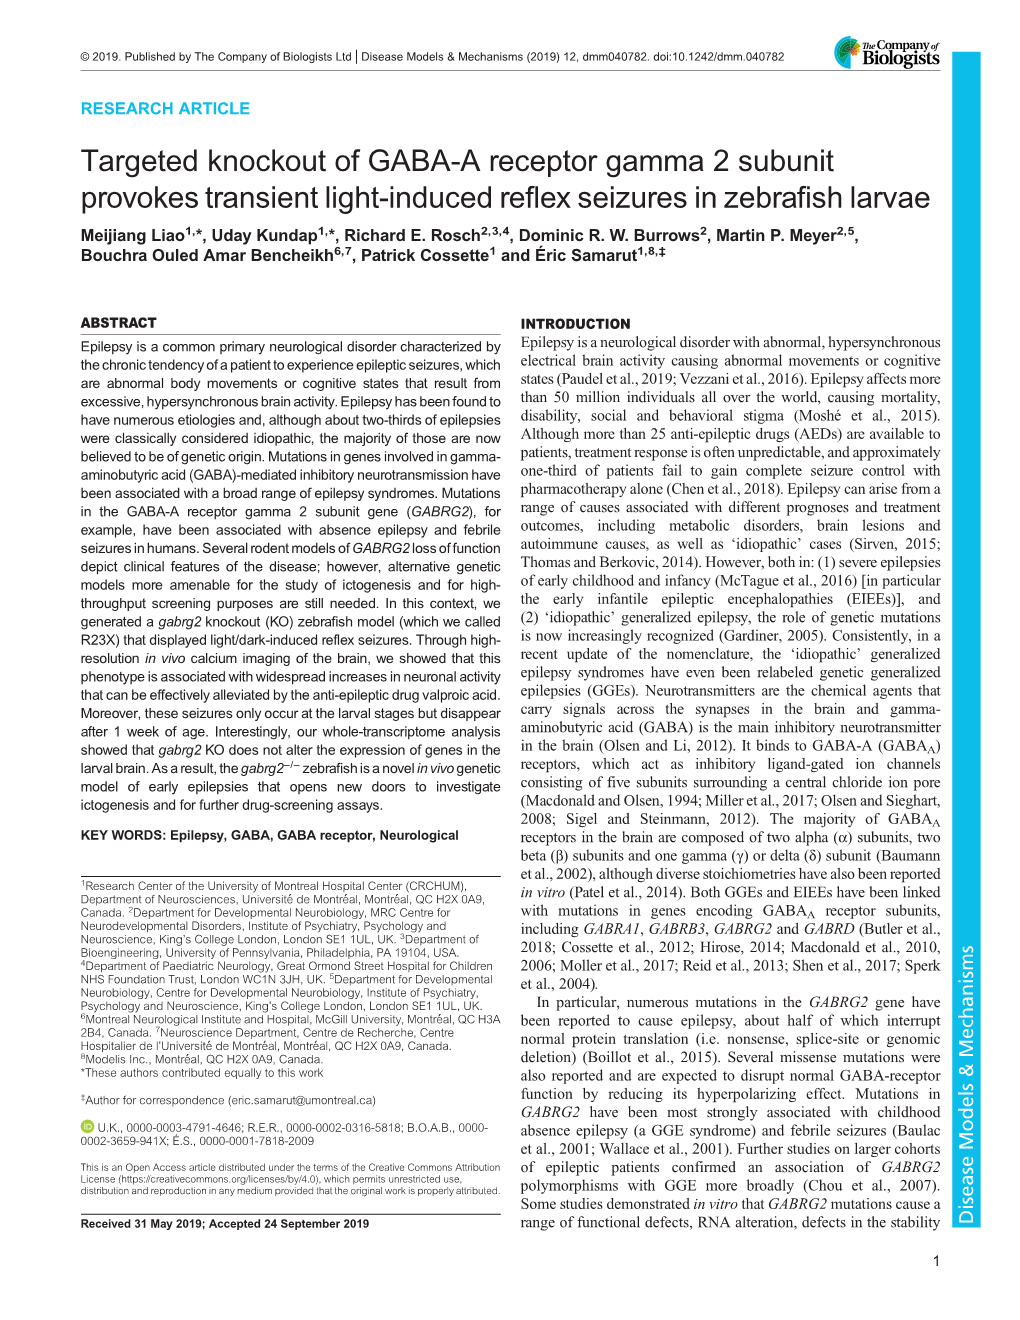 Targeted Knockout of GABA-A Receptor Gamma 2 Subunit Provokes Transient Light-Induced Reflex Seizures in Zebrafish Larvae Meijiang Liao1,*, Uday Kundap1,*, Richard E